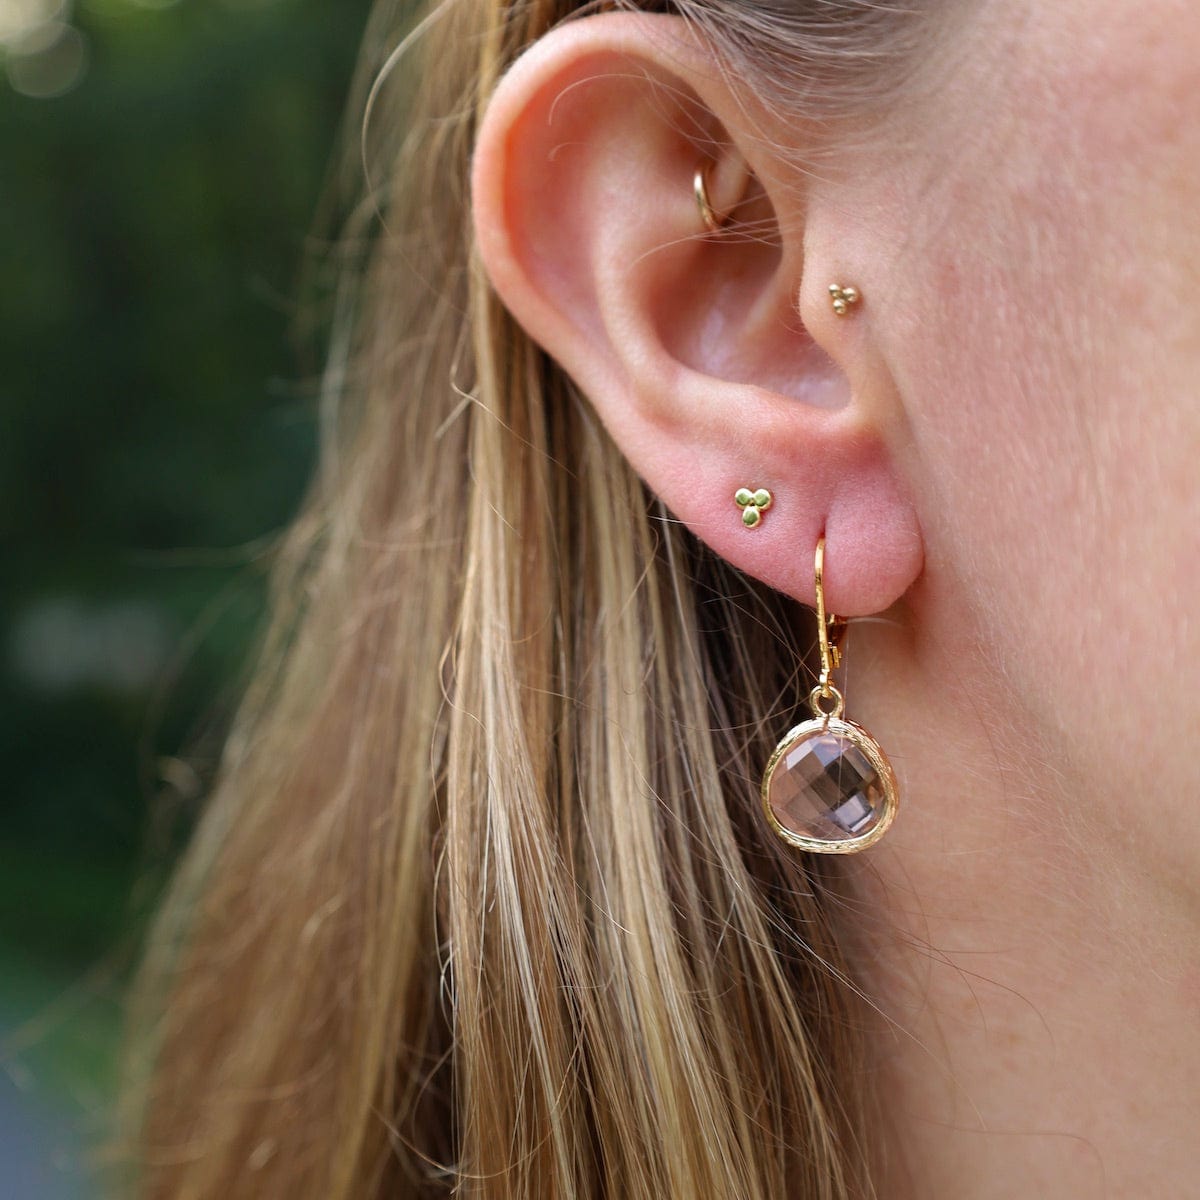 EAR-GPL Gold Plated Crystal Lever Back Earrings - Peach